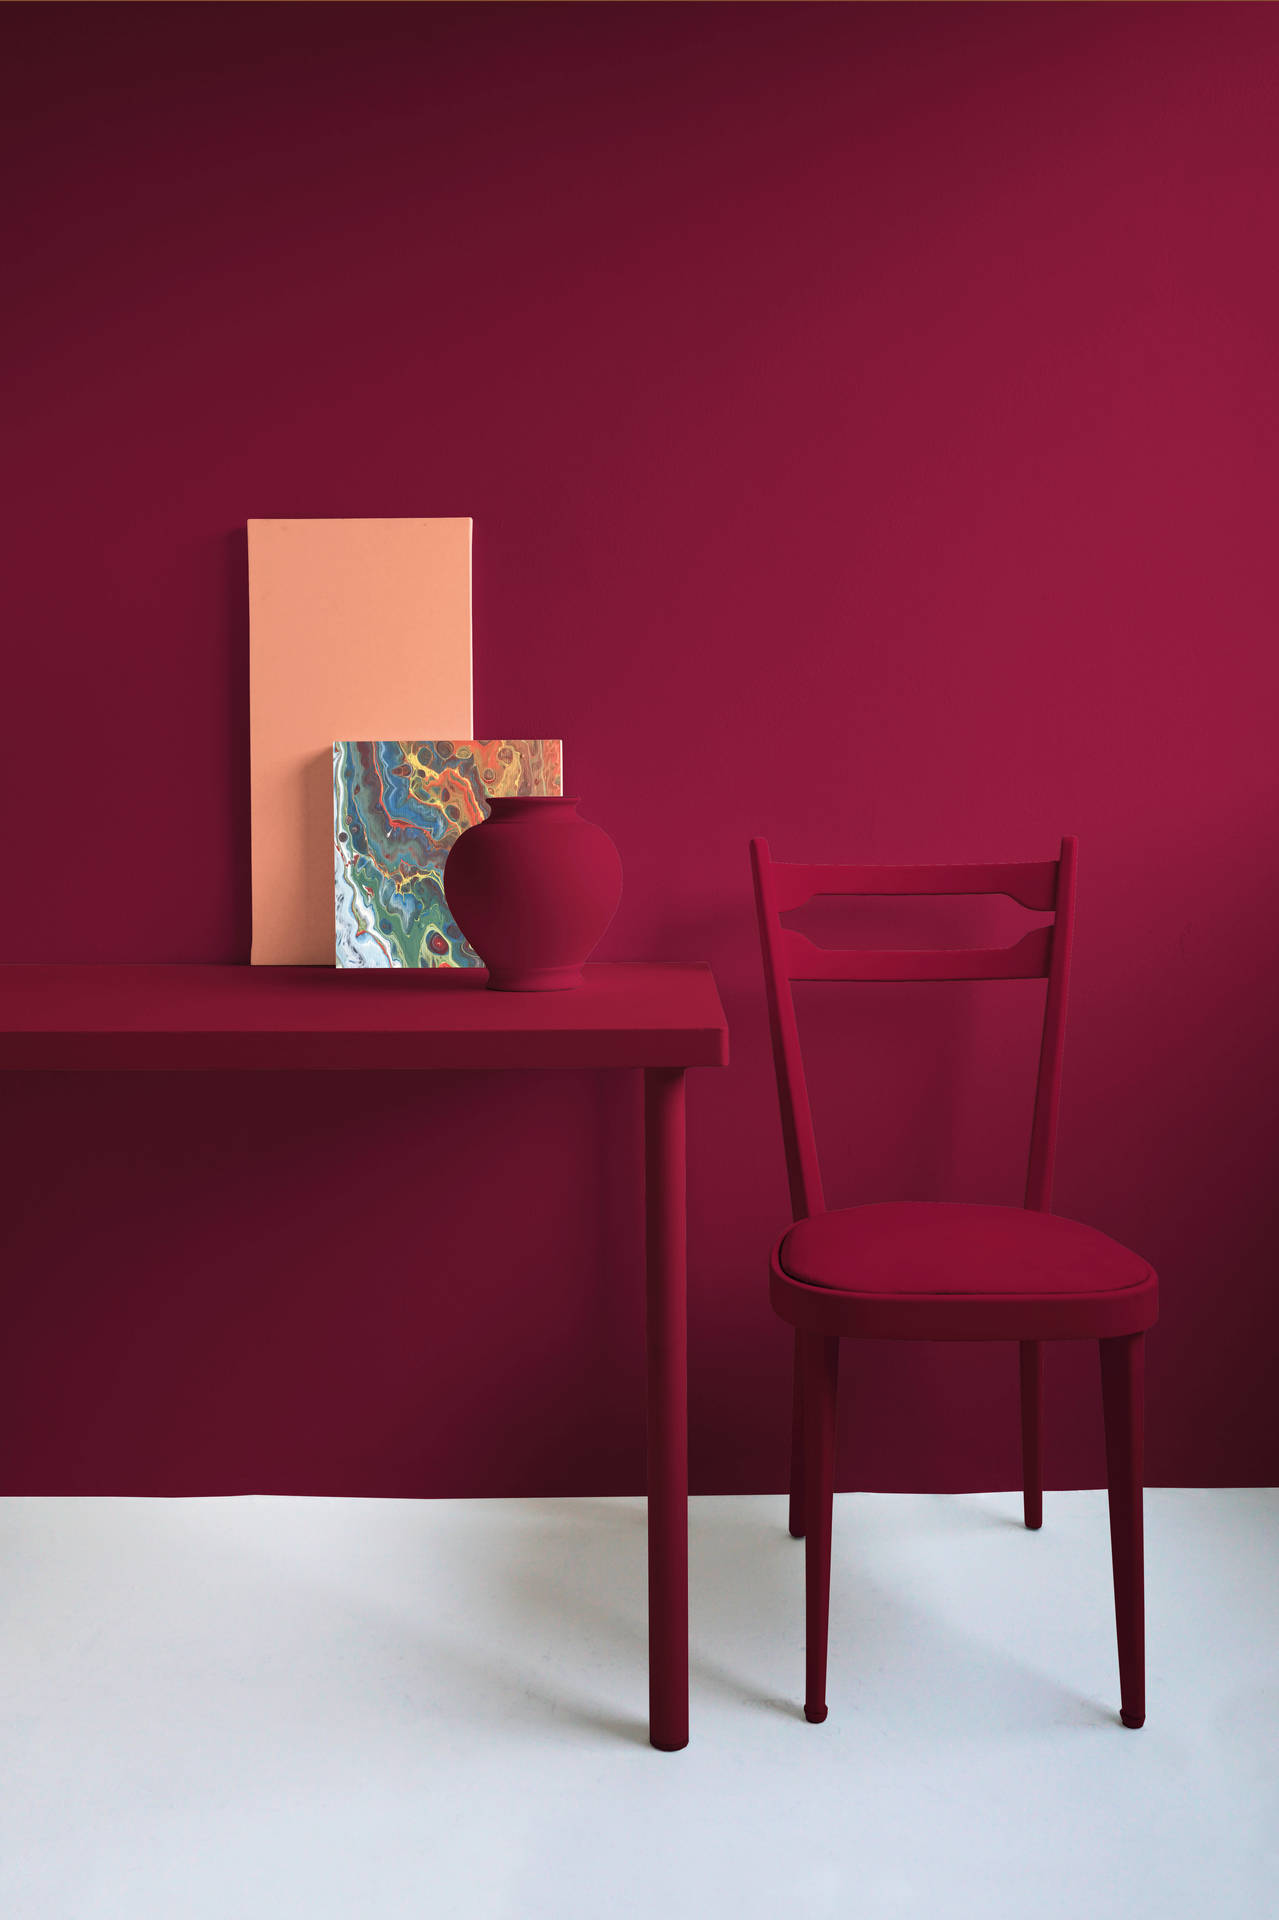 Magenta Furniture Against Magenta Wall Wallpaper